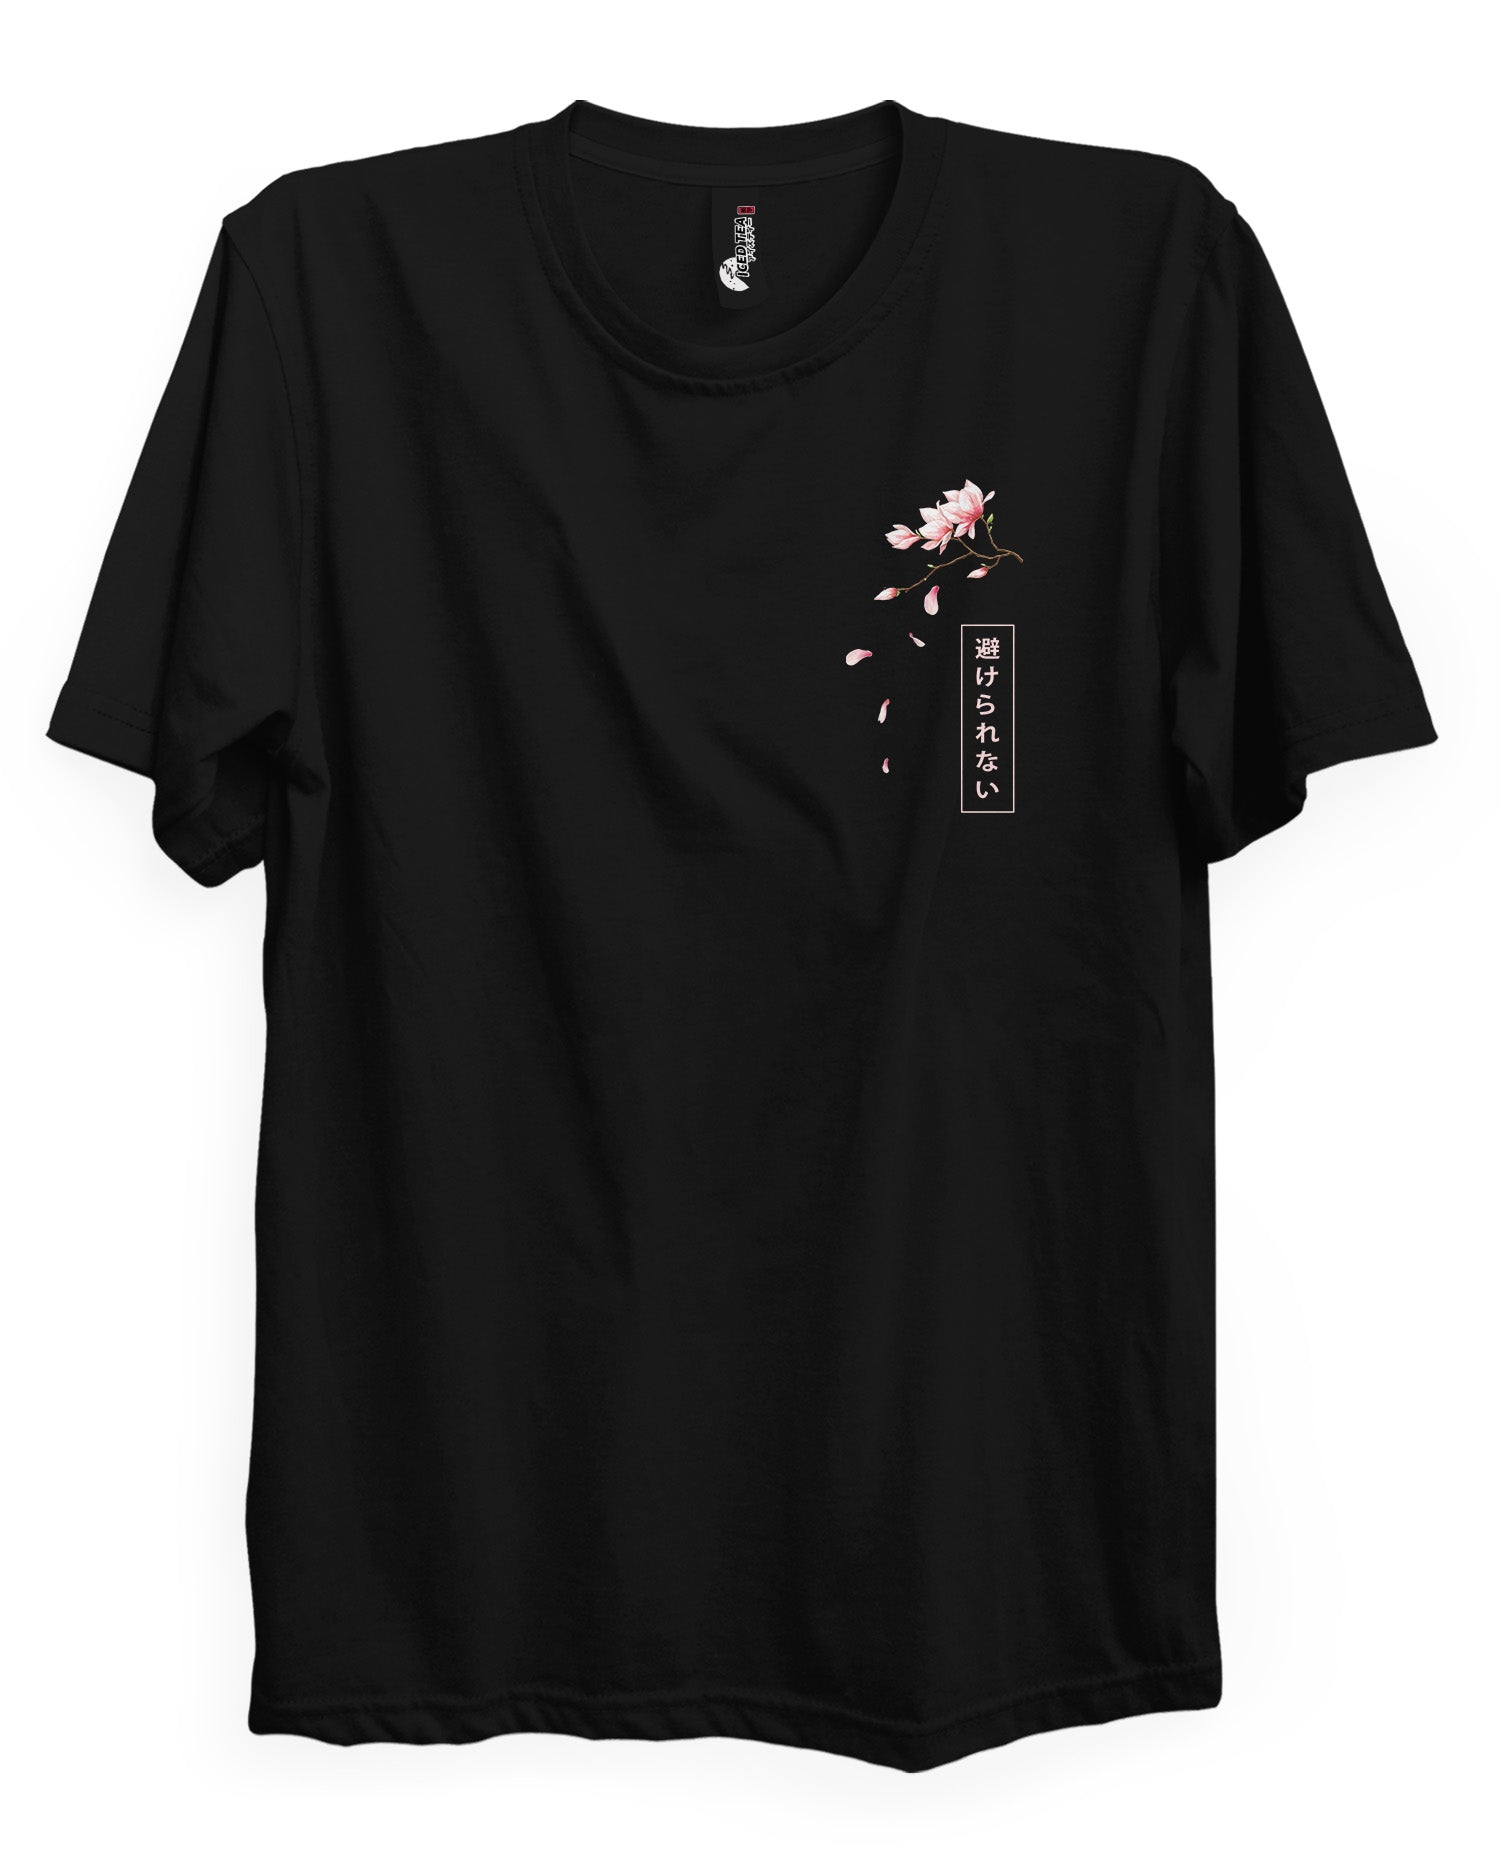 Death (ROSE) - T-Shirt Back Print